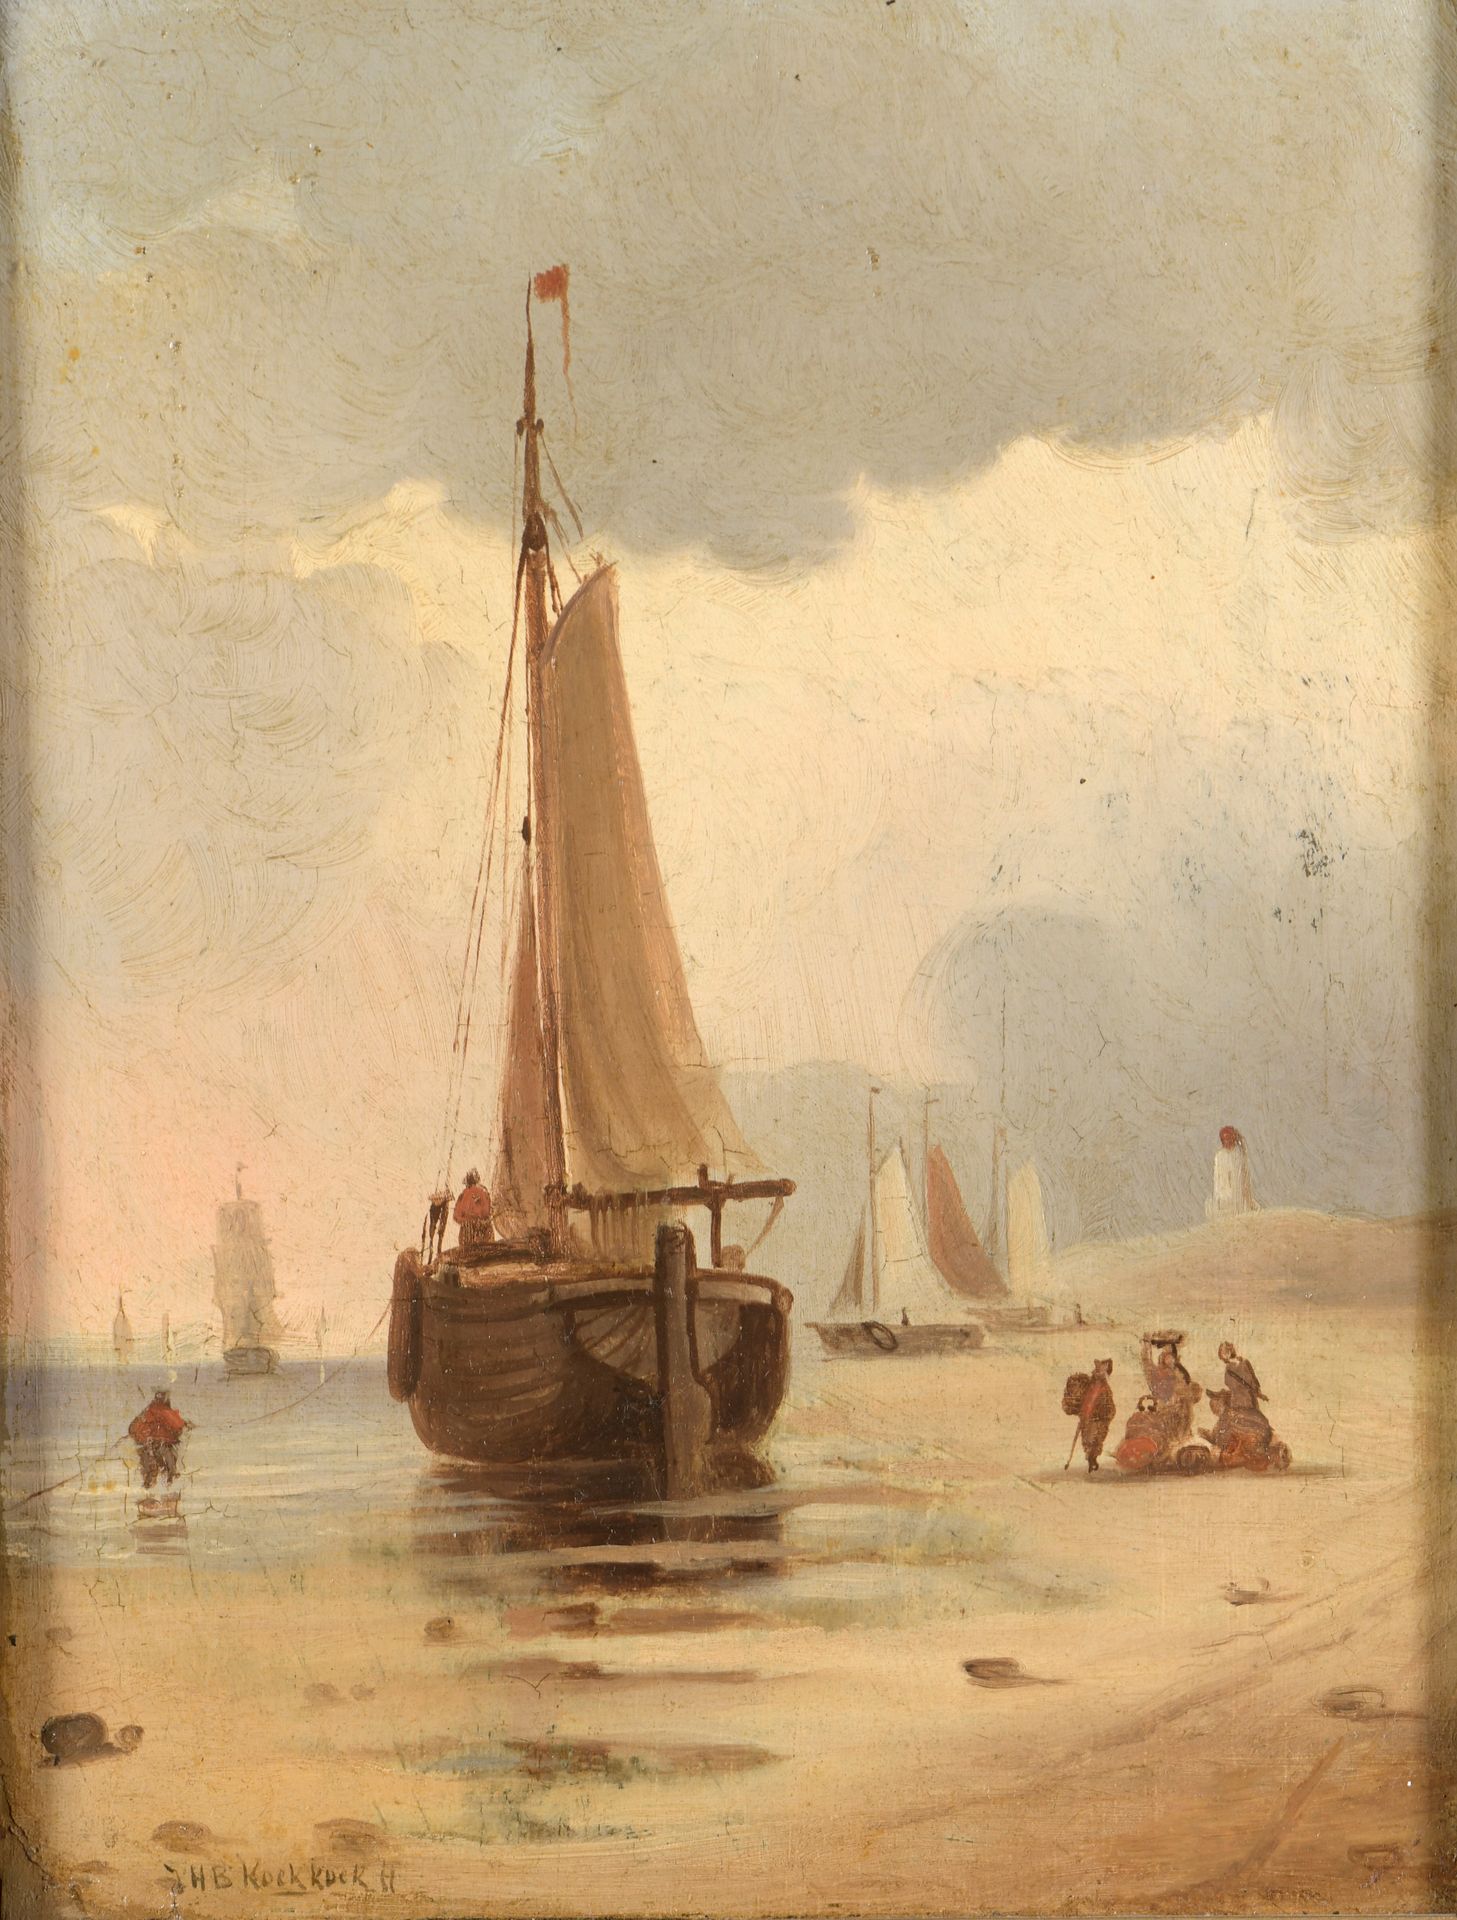 Null 归功于扬-赫尔曼-巴伦-科克科克（1840-1912）。

退潮时的船

板面油画，左下角有签名

26,5 x 20 cm